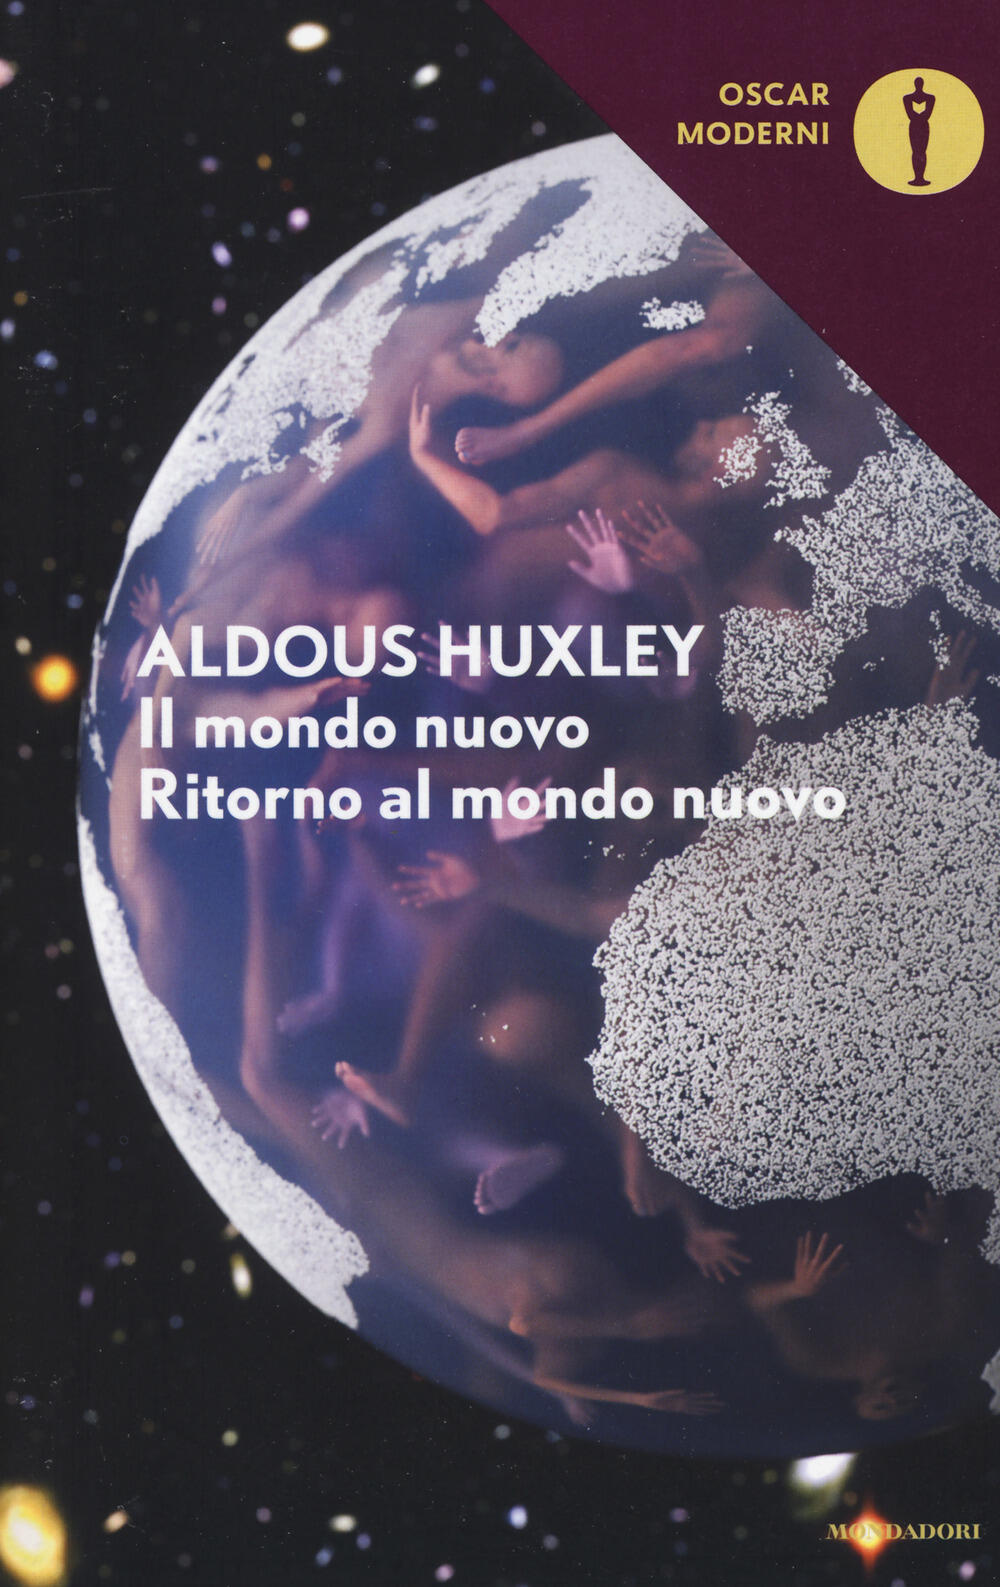 Il mondo nuovoRitorno al mondo nuovo Aldous Huxley Libro Mondadori Oscar moderni IBS